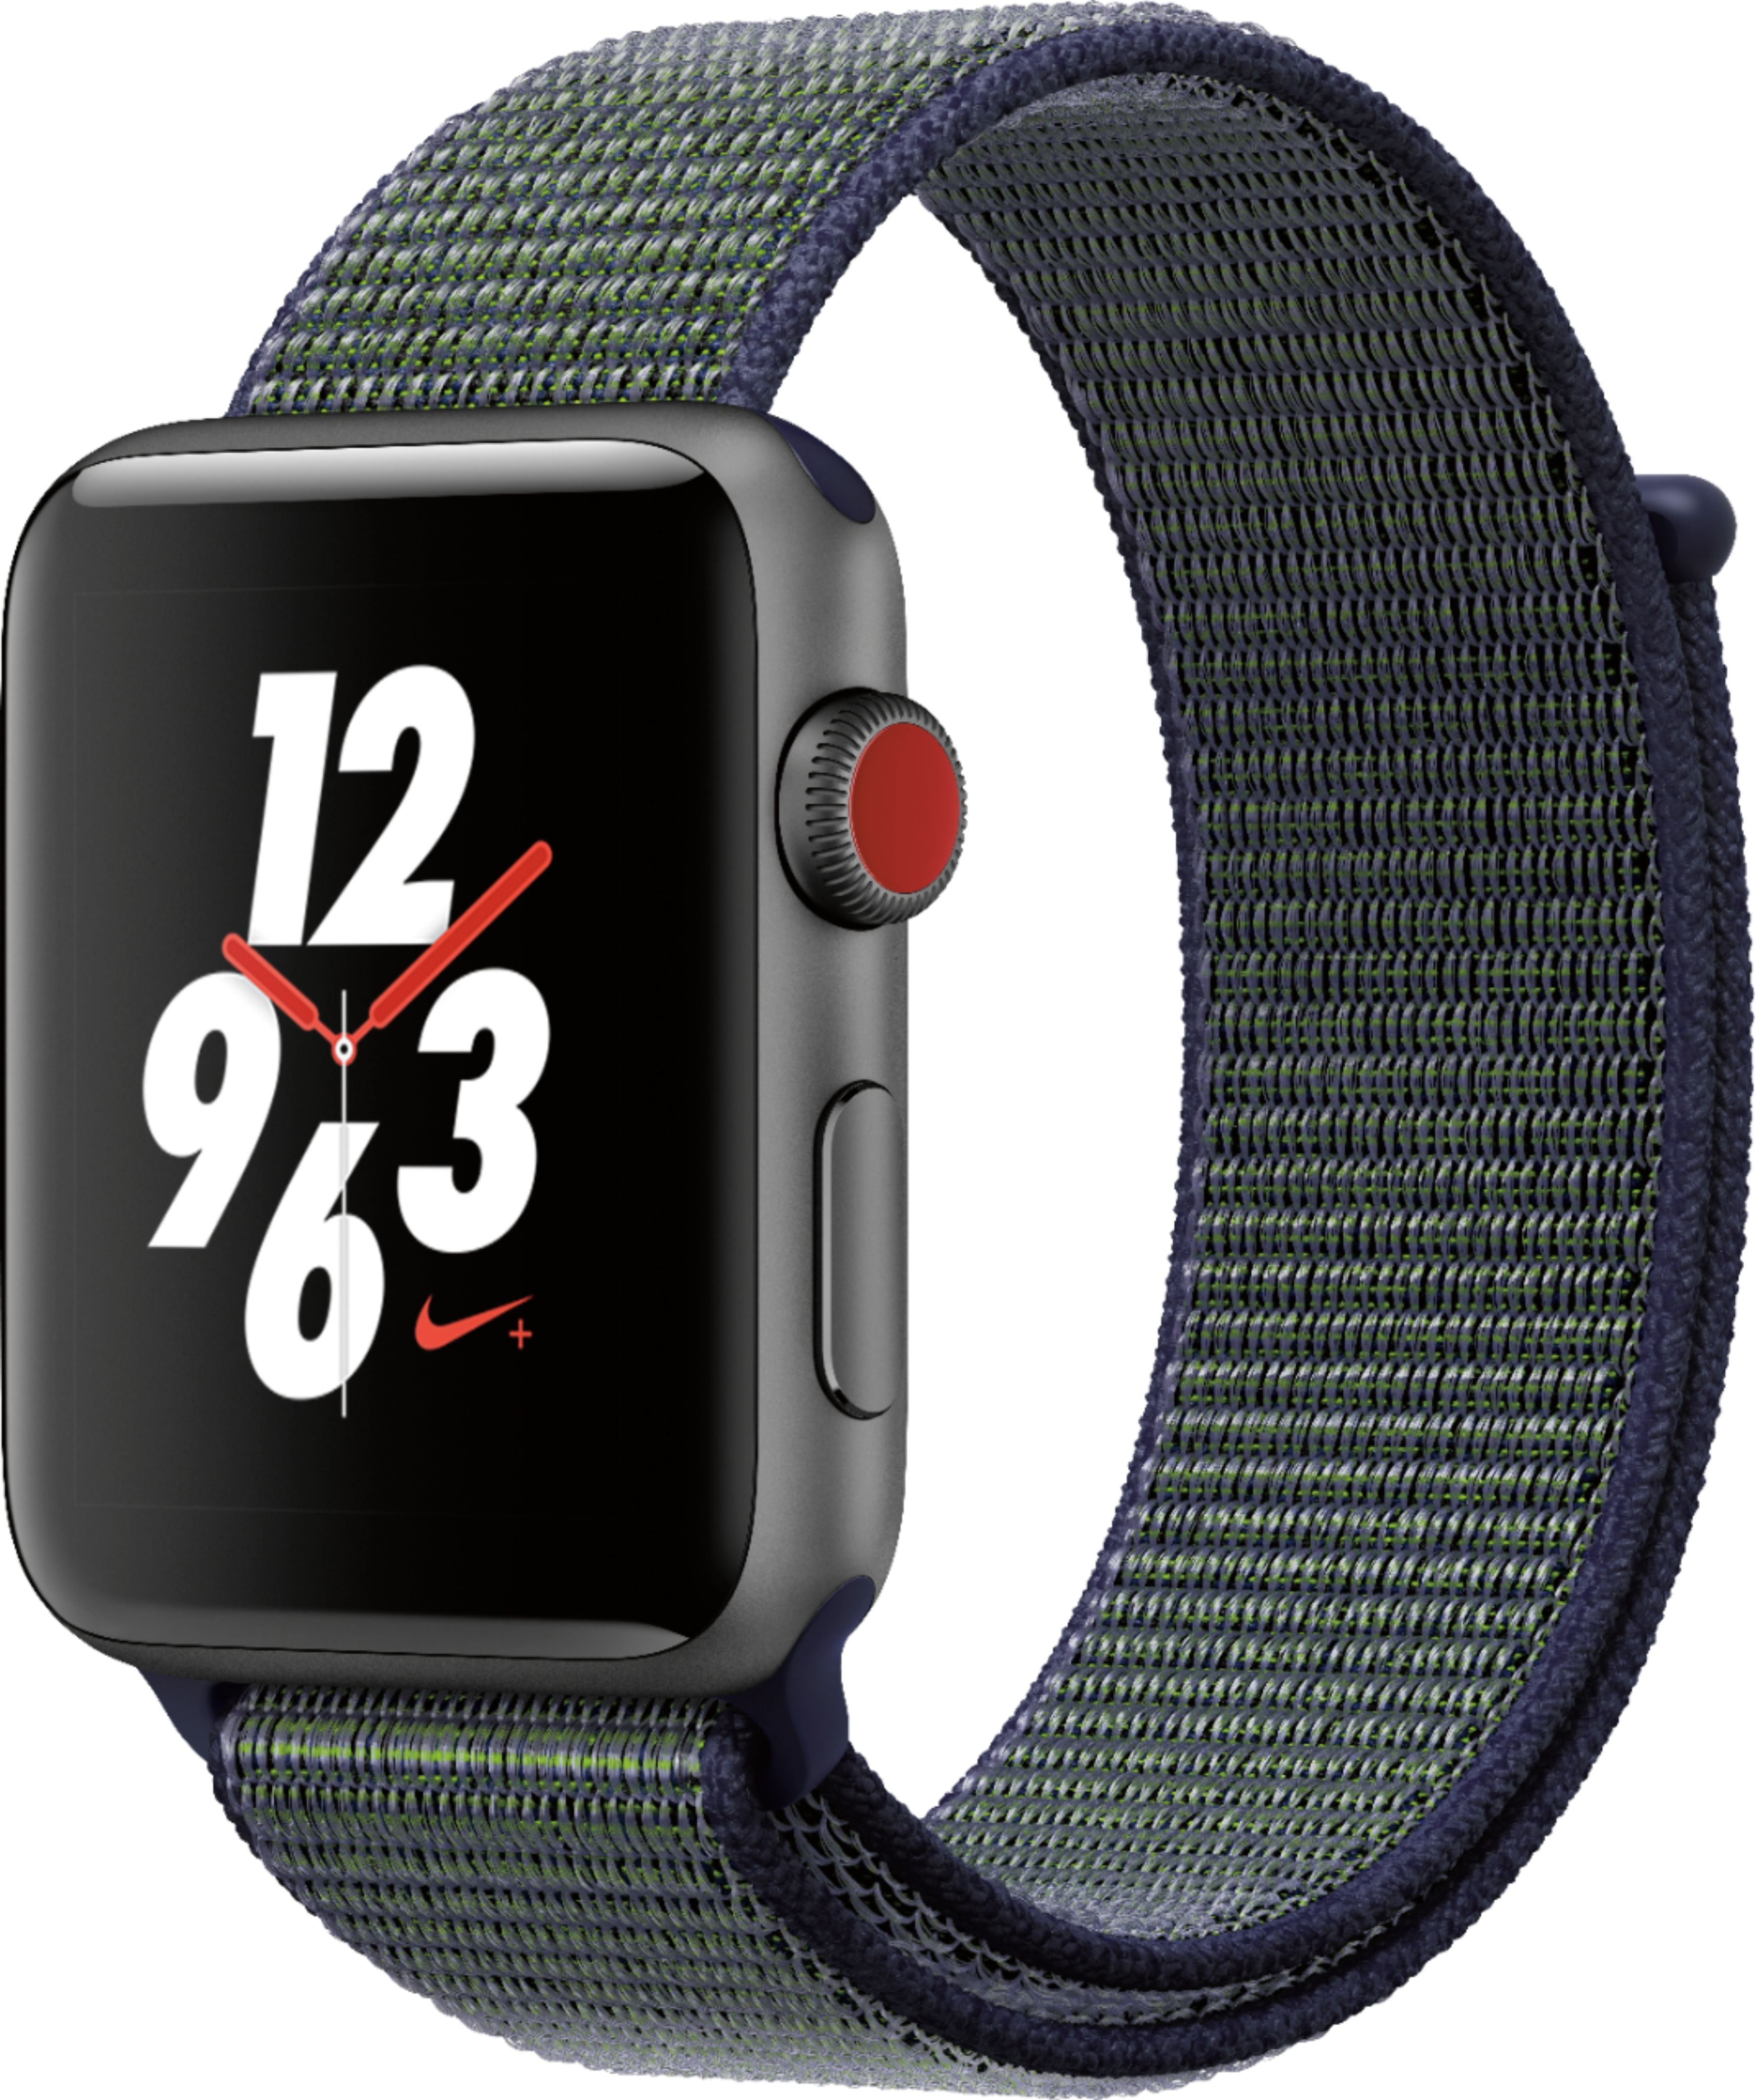 Apple Watch Nike Series 3 42mm Space Gray Aluminum Case/ Midnight 